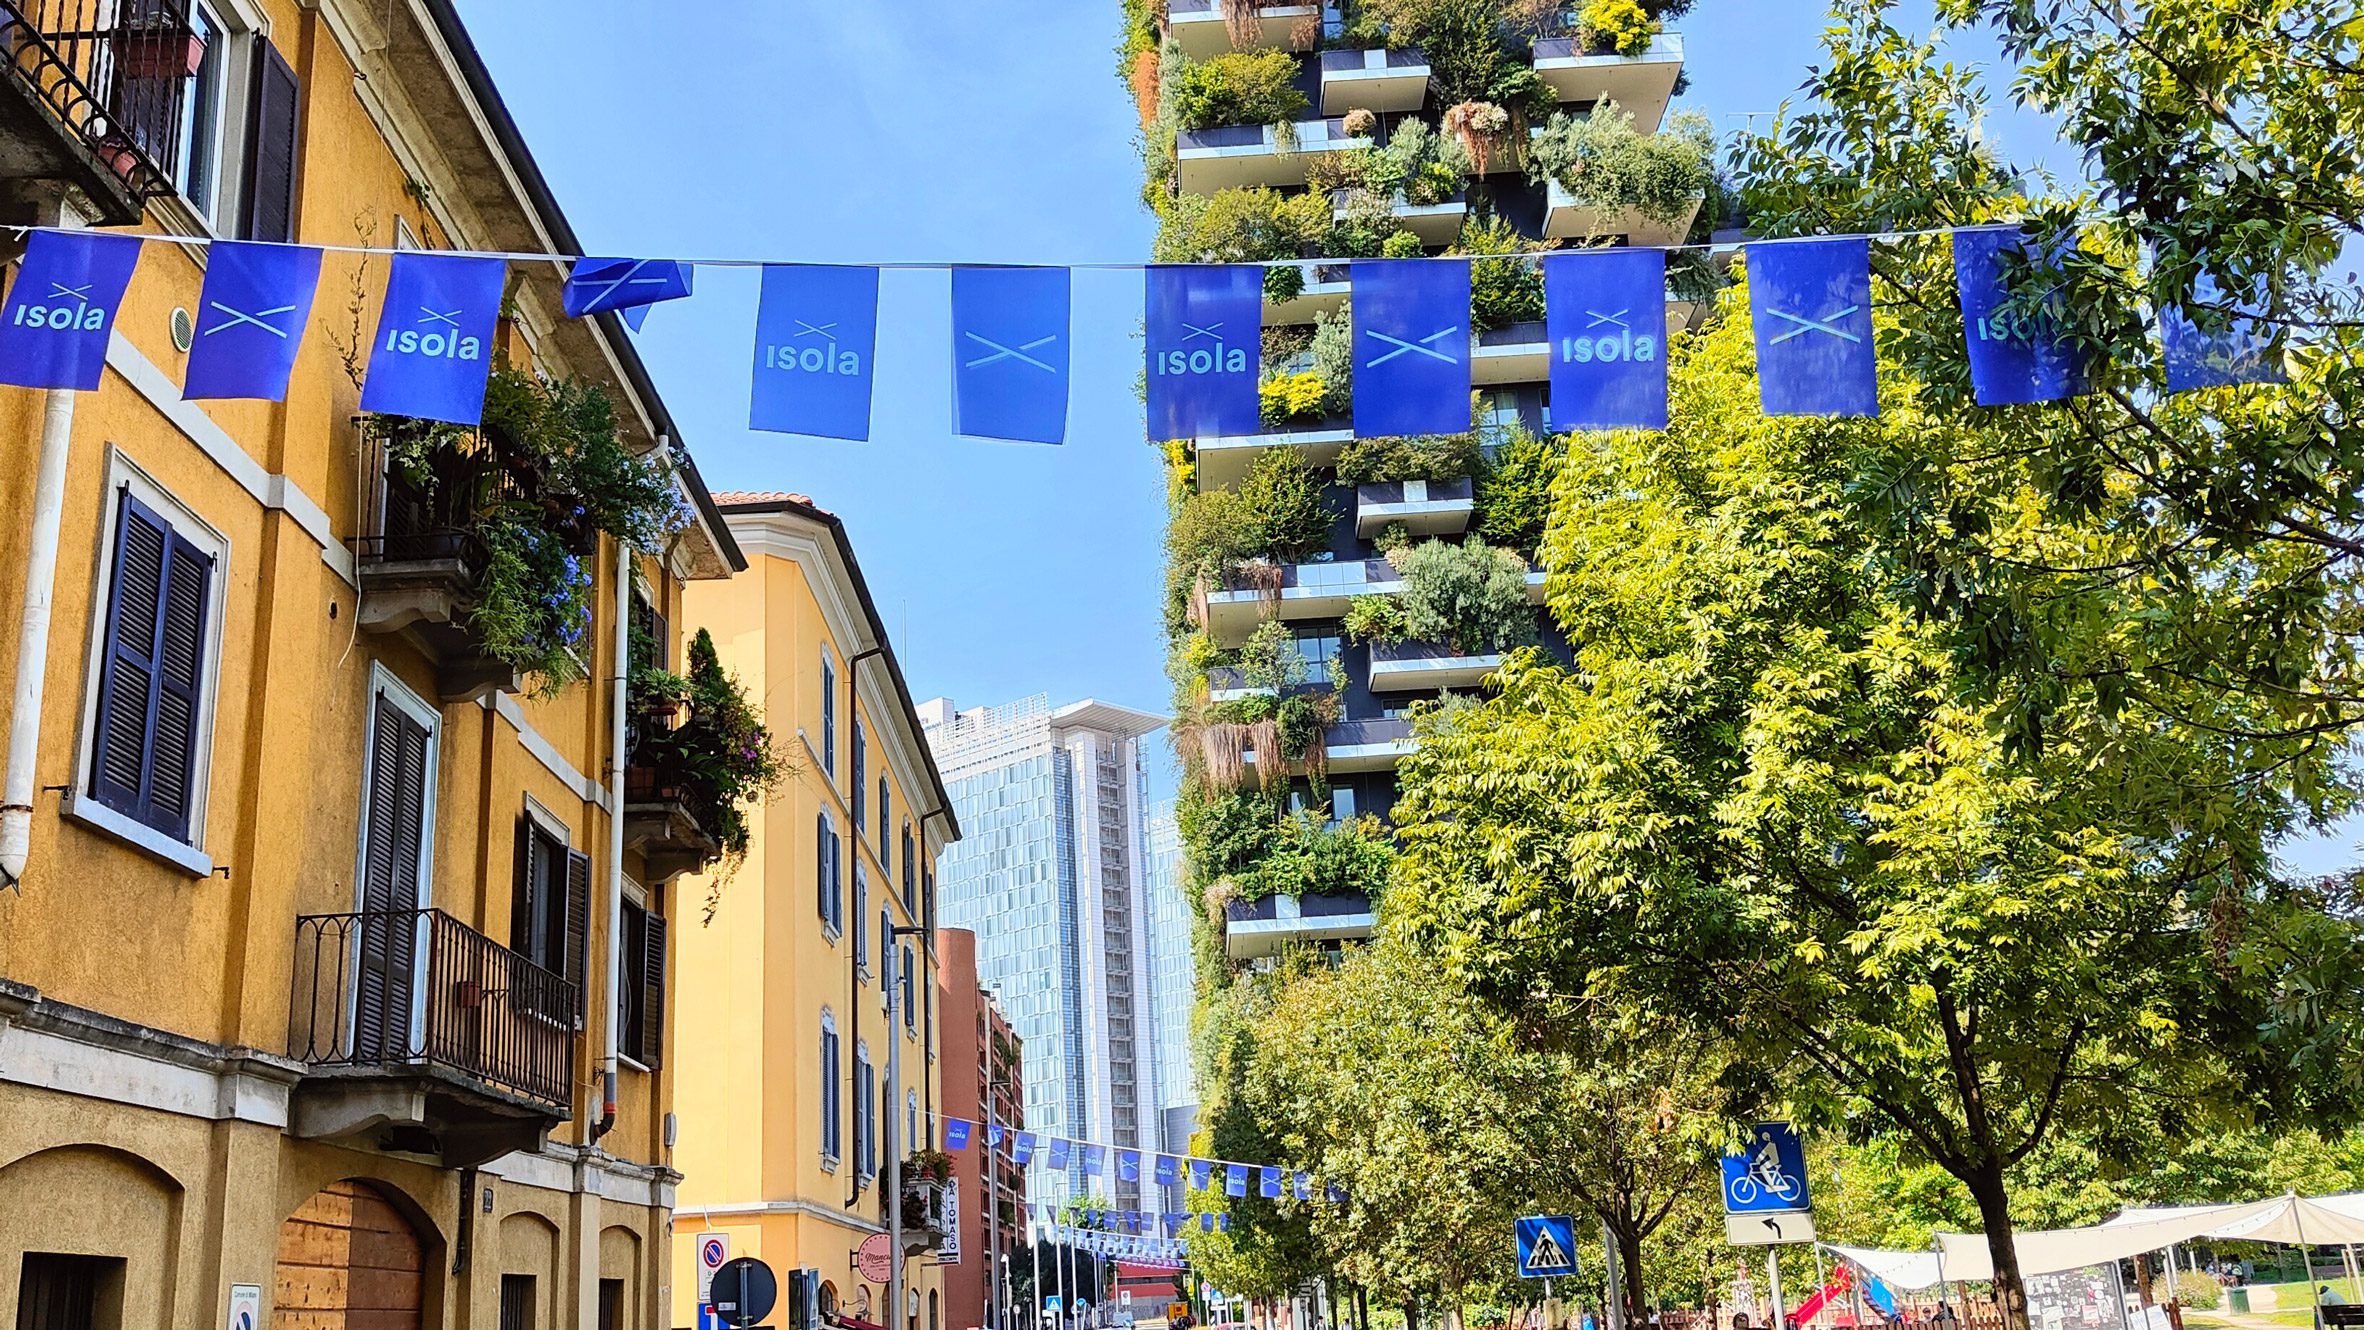 Low-key 2021 Milan design week shows that less is better